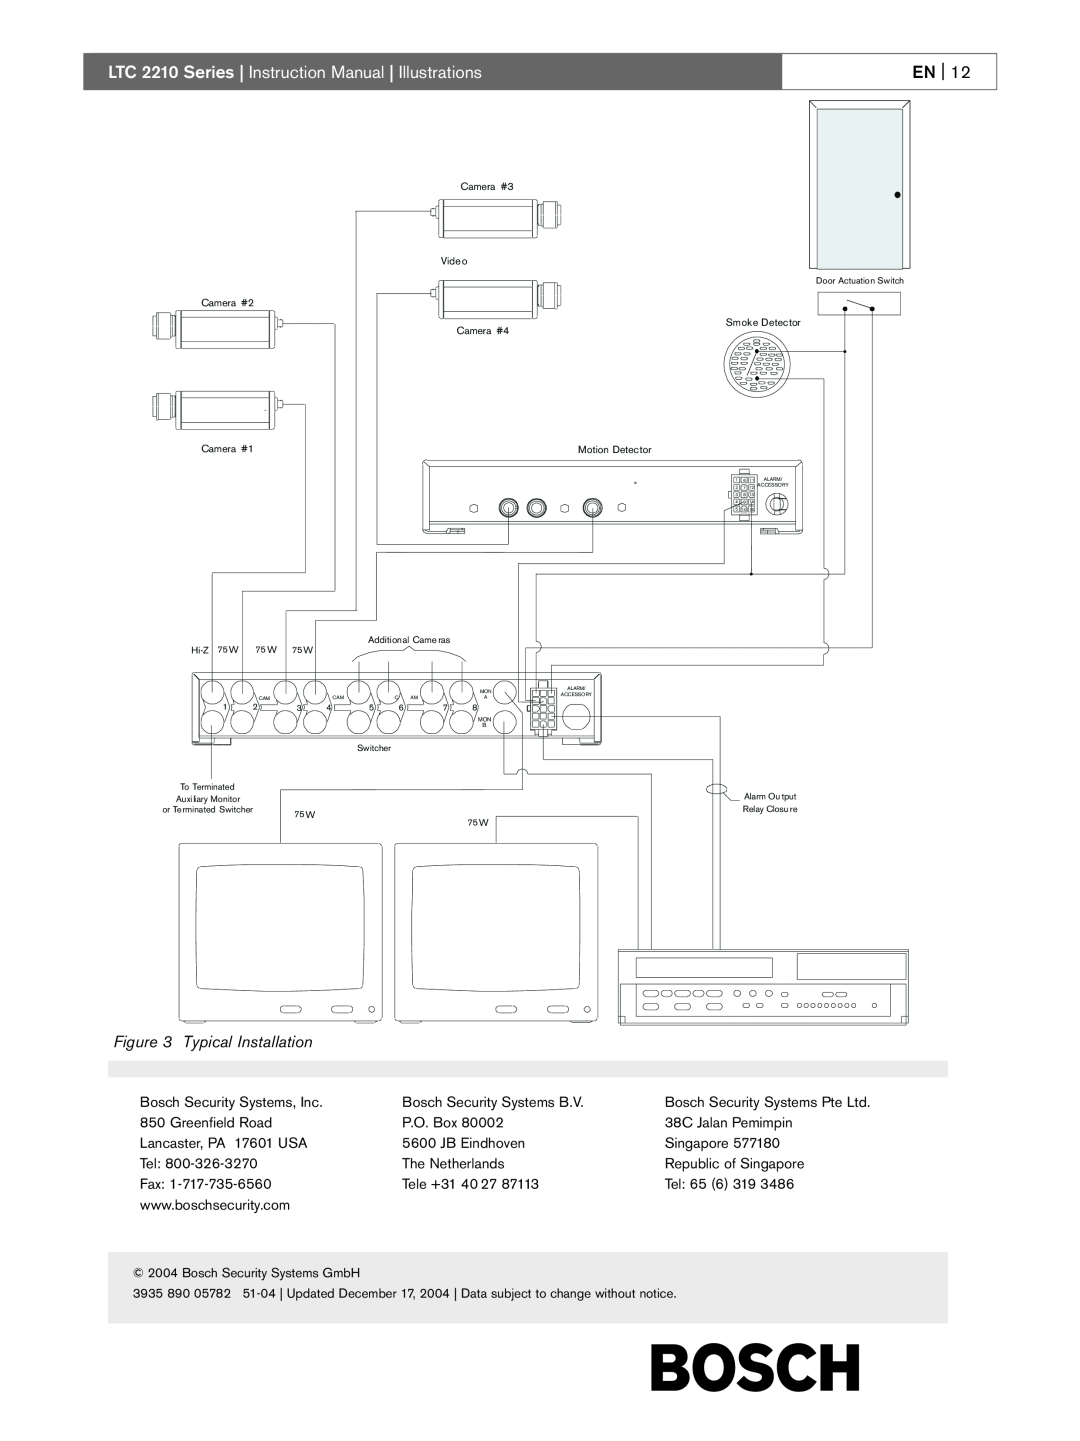 Bosch Appliances LTC 2210 instruction manual En, Typical Installation 